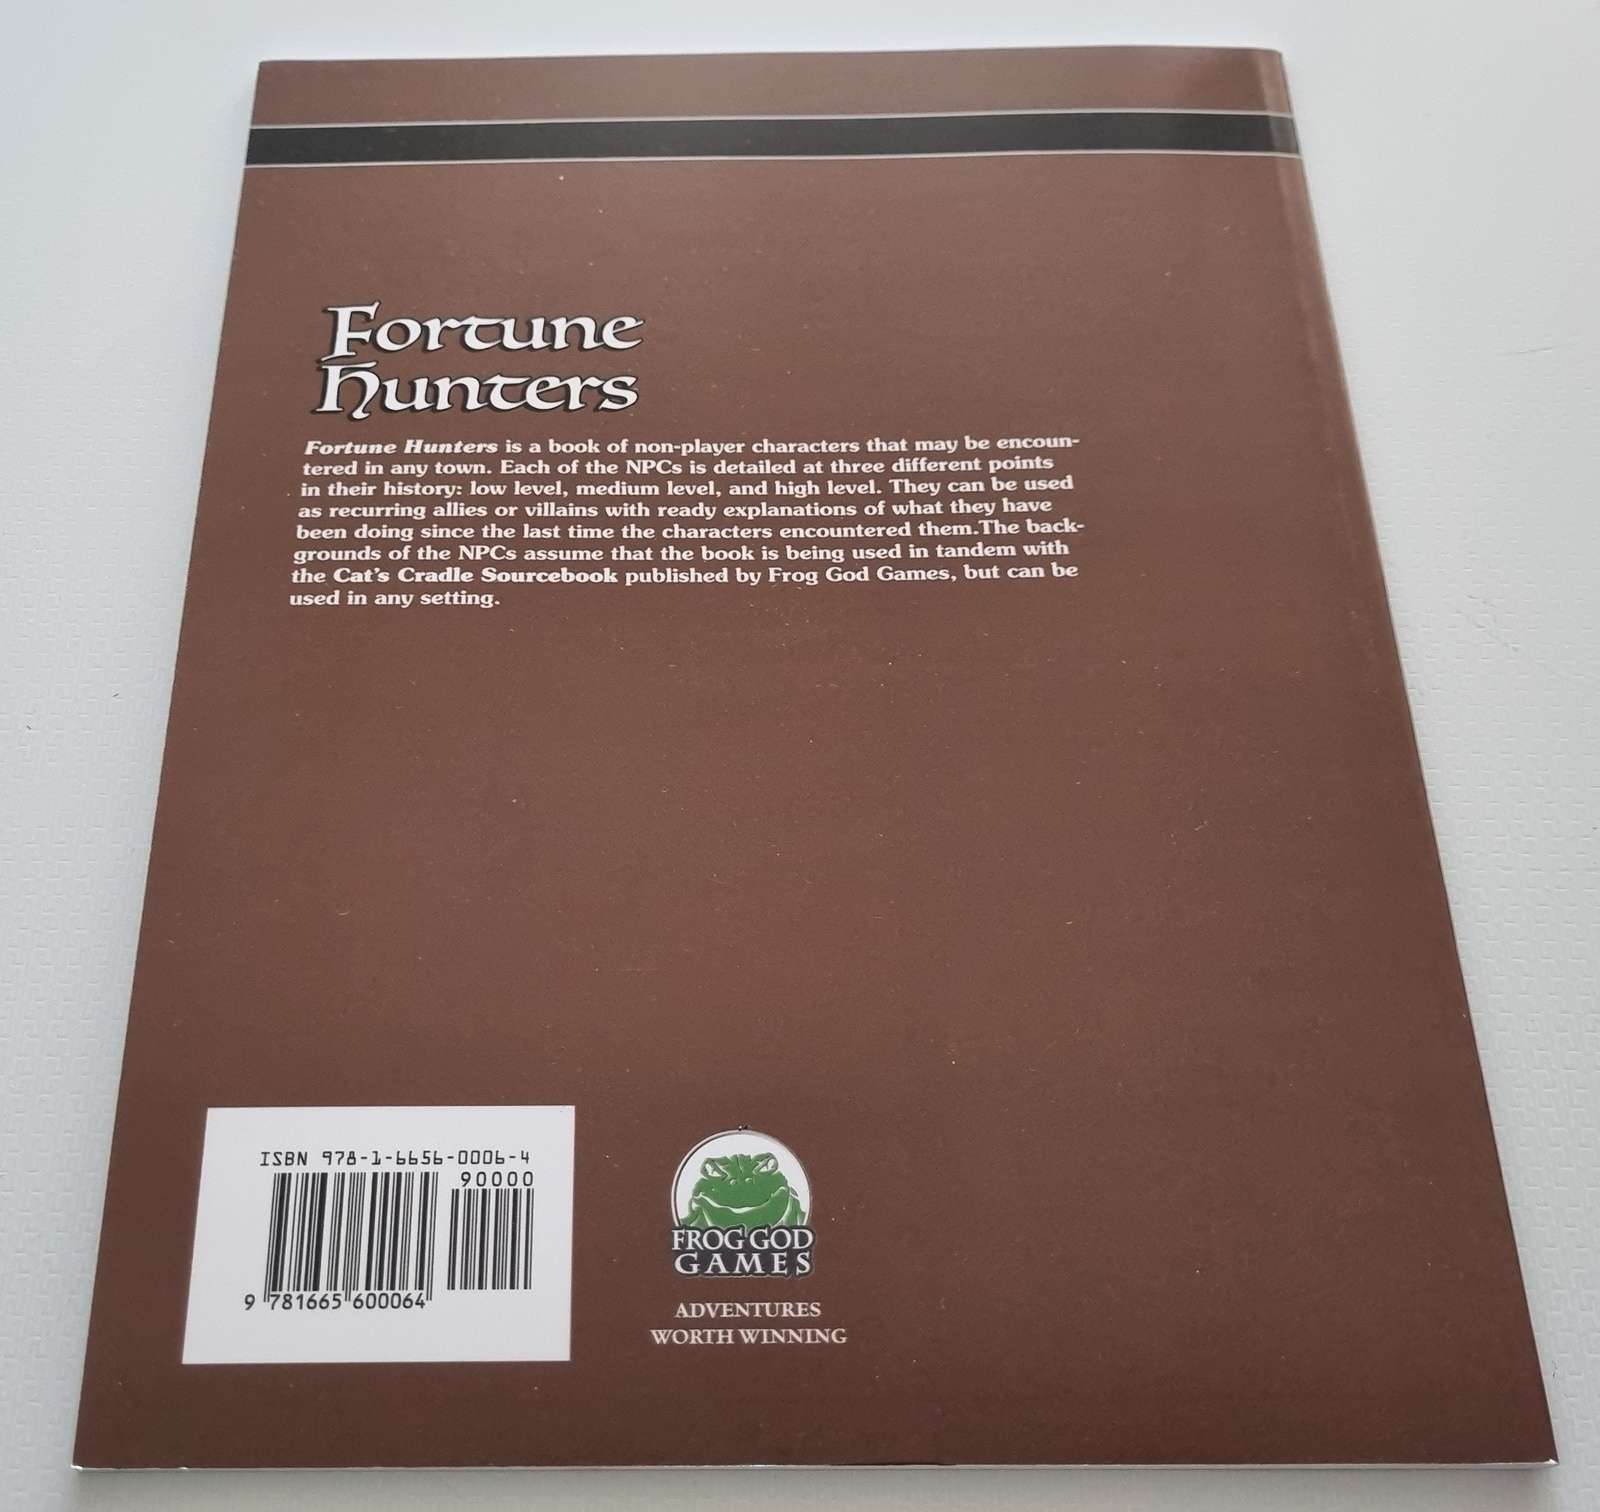 Fortune Hunters NPC Sourcebook (Cat's Cradle) - D&D 5th Edition (5e)